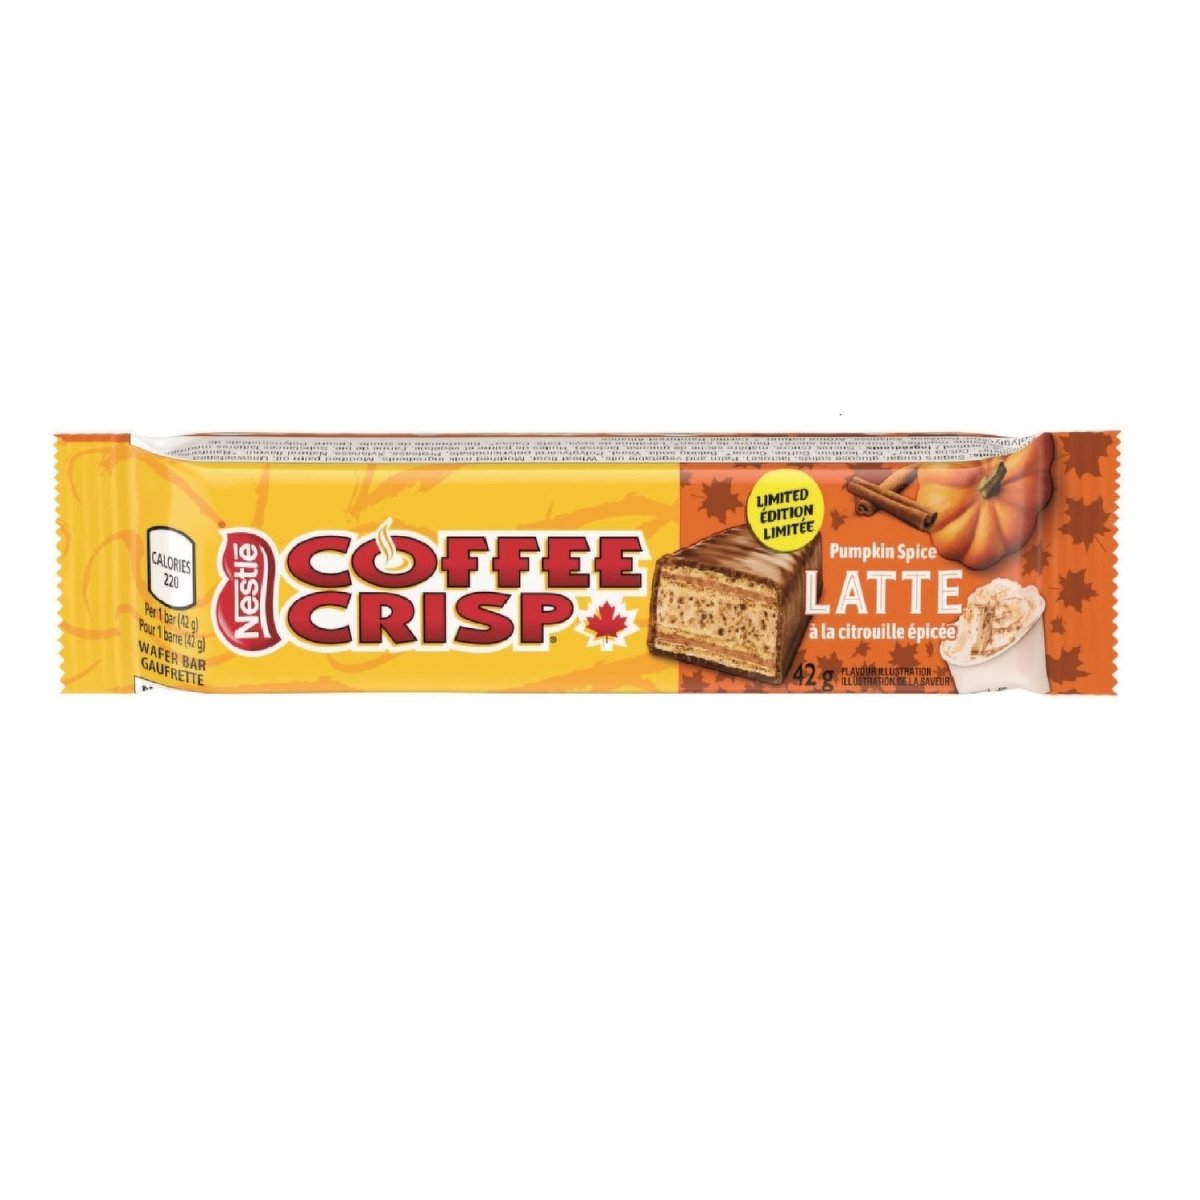 Nestle Coffee Crisp Pumpkin Spice Latte 42g - Candy Mail UK